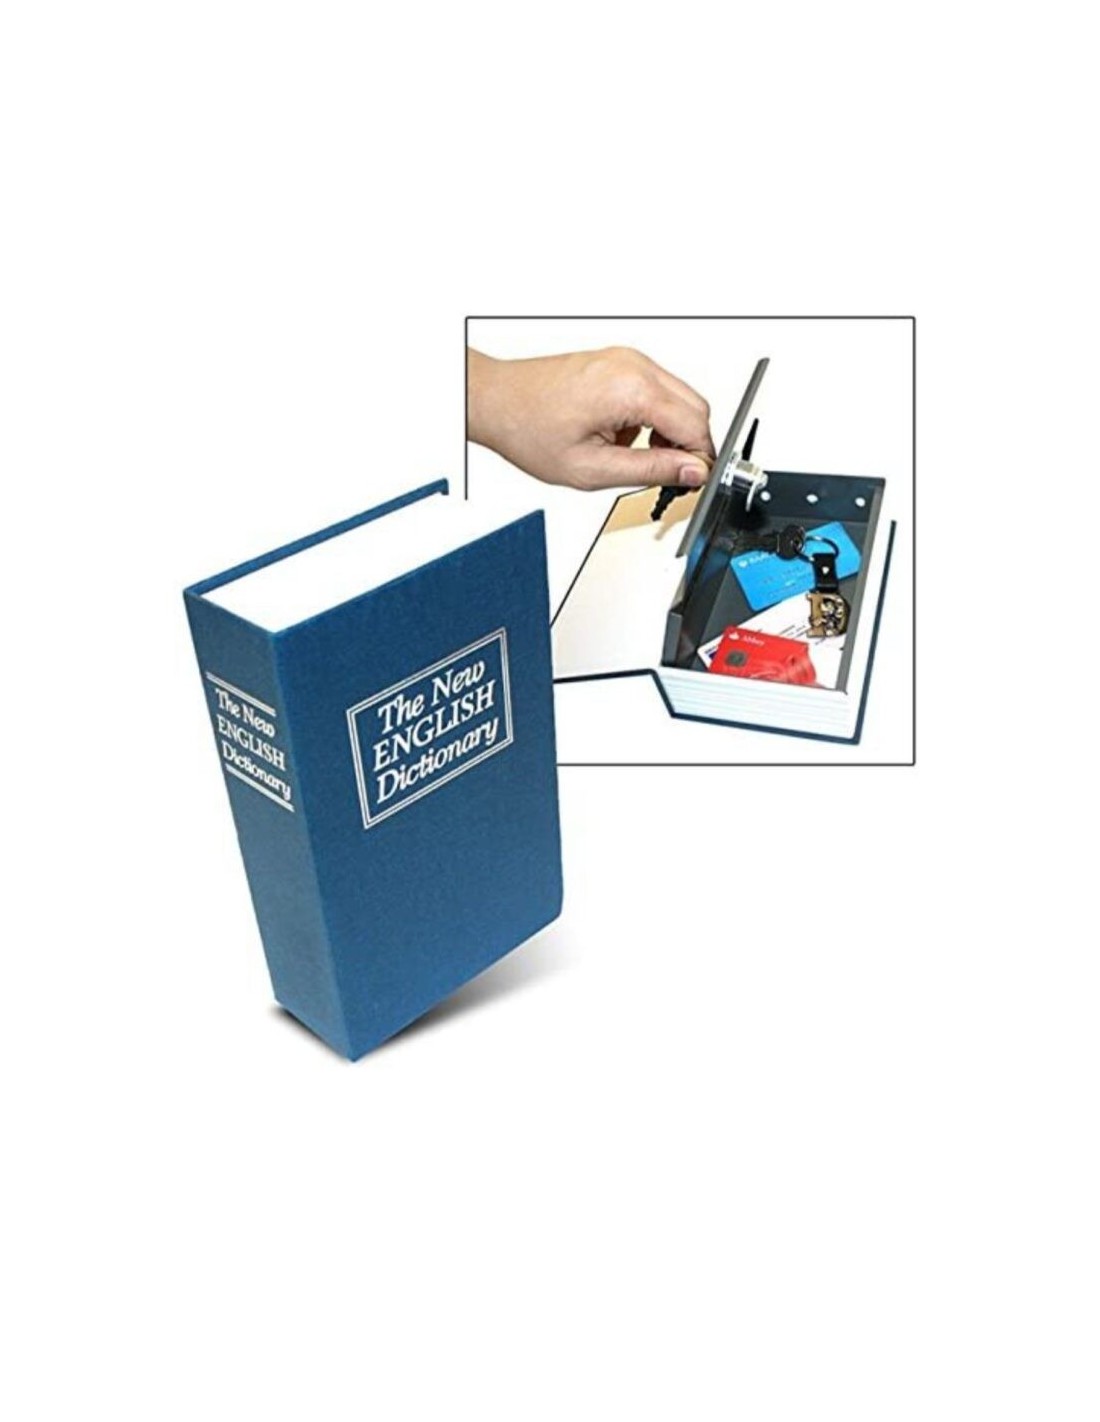 Cassaforte a forma di libro, Cassetta di sicurezza